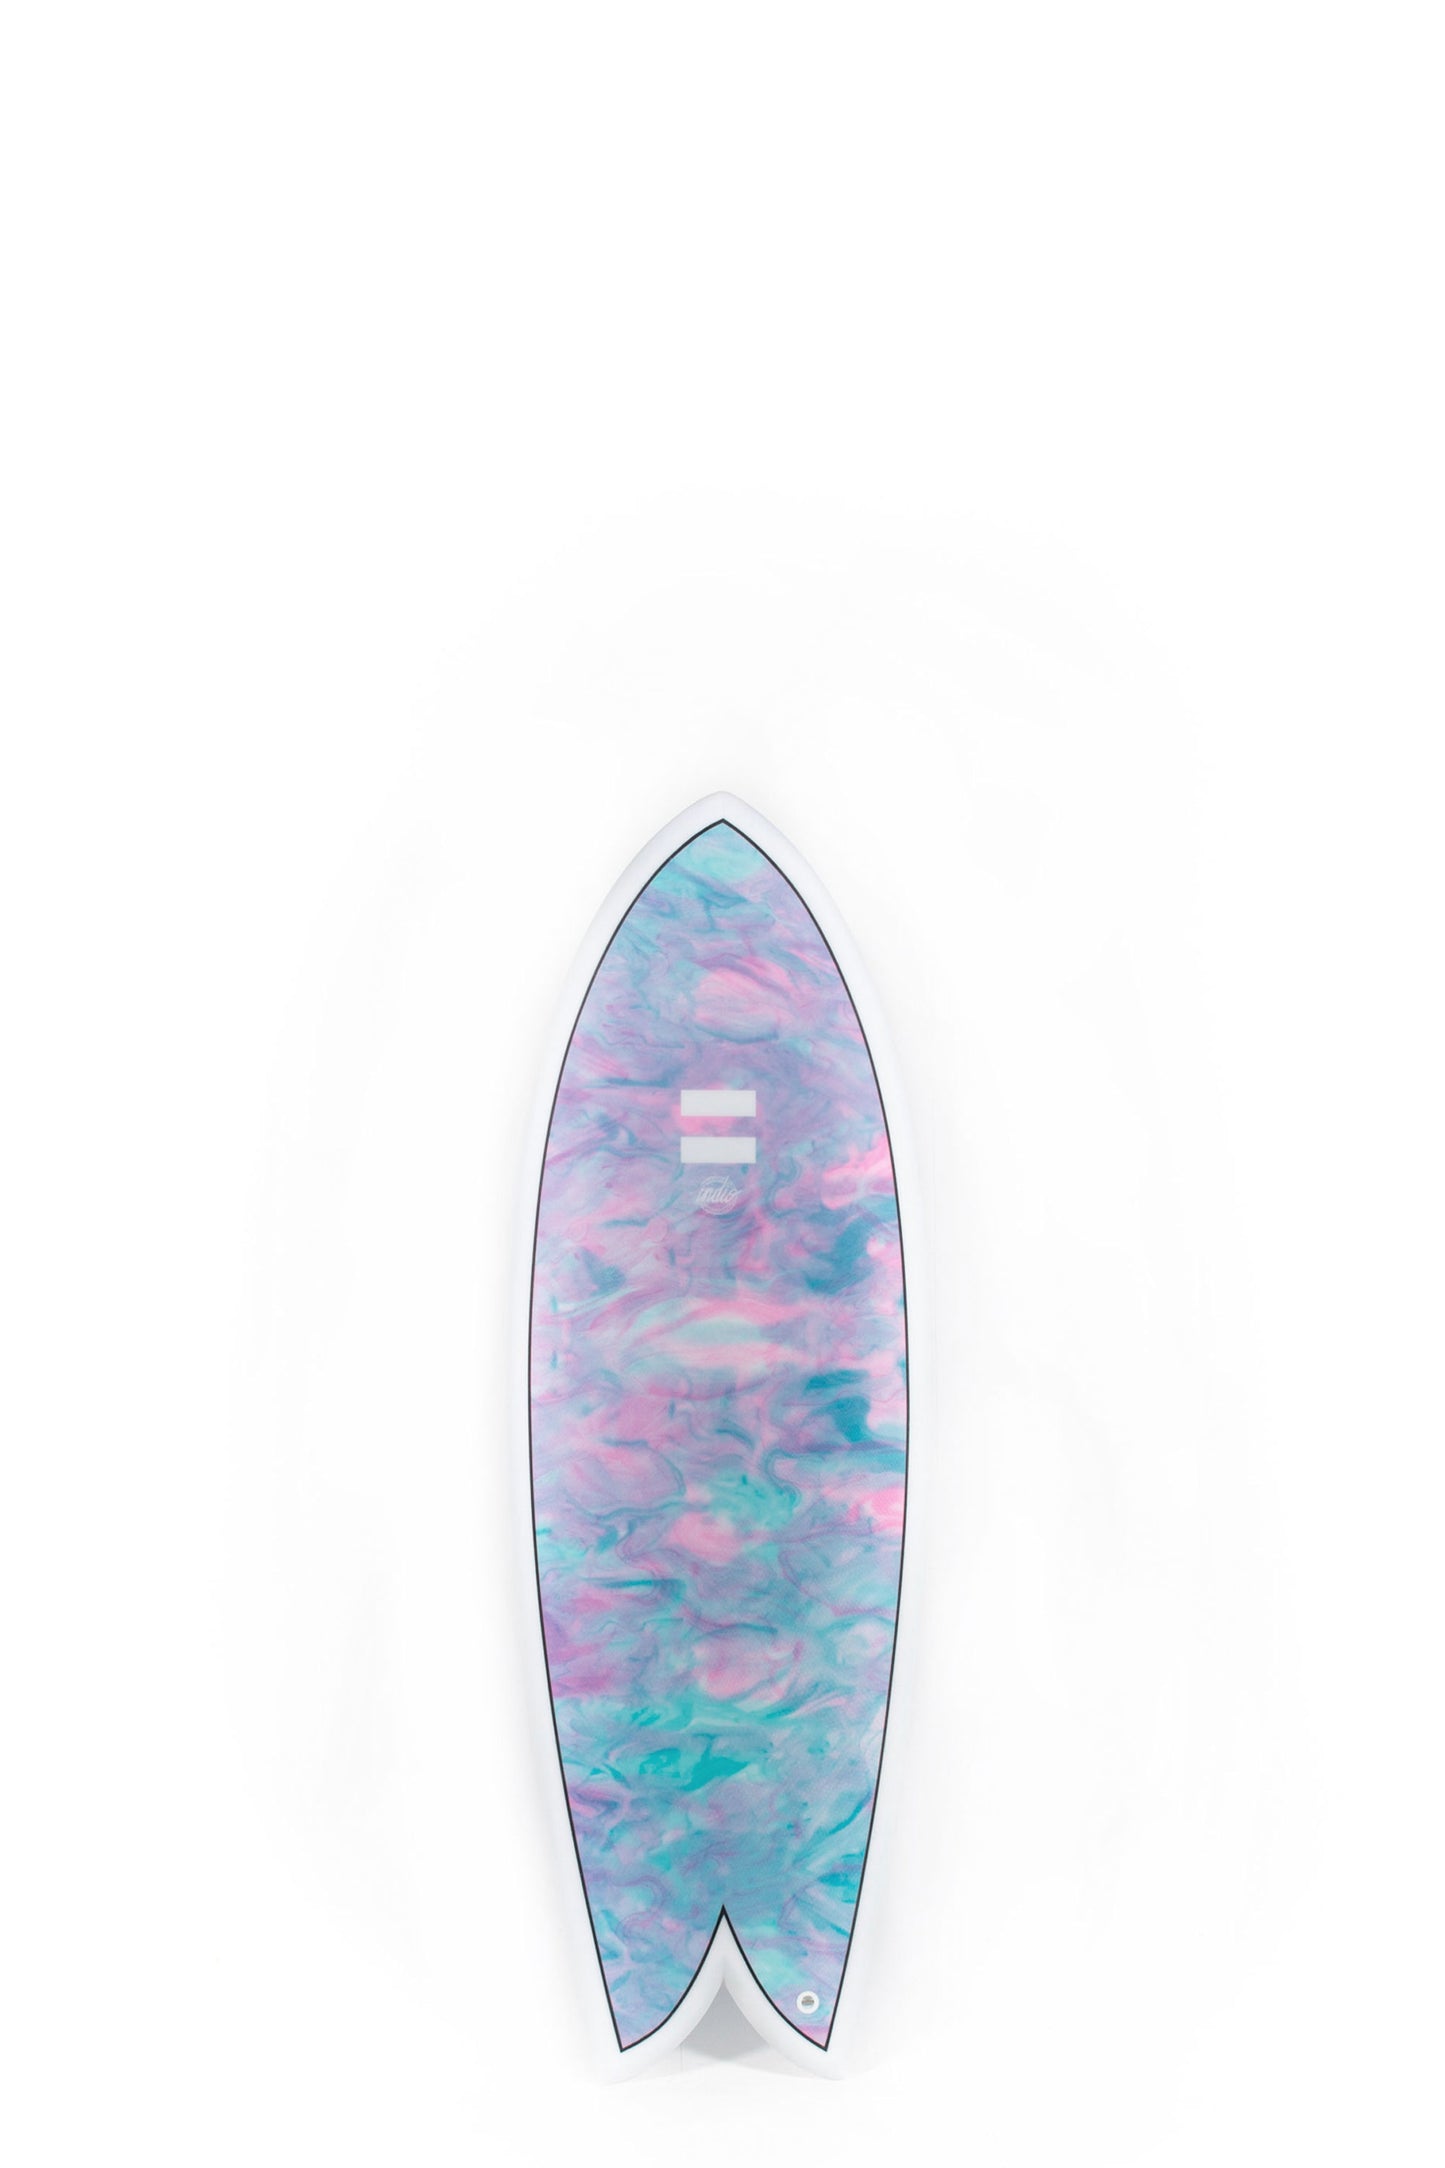 Pukas Surf Shop - Indio Surfboards - DAB Swirl Effect Blue Purple - 5’7” x 21 x 2 1/2 x 35.8L.